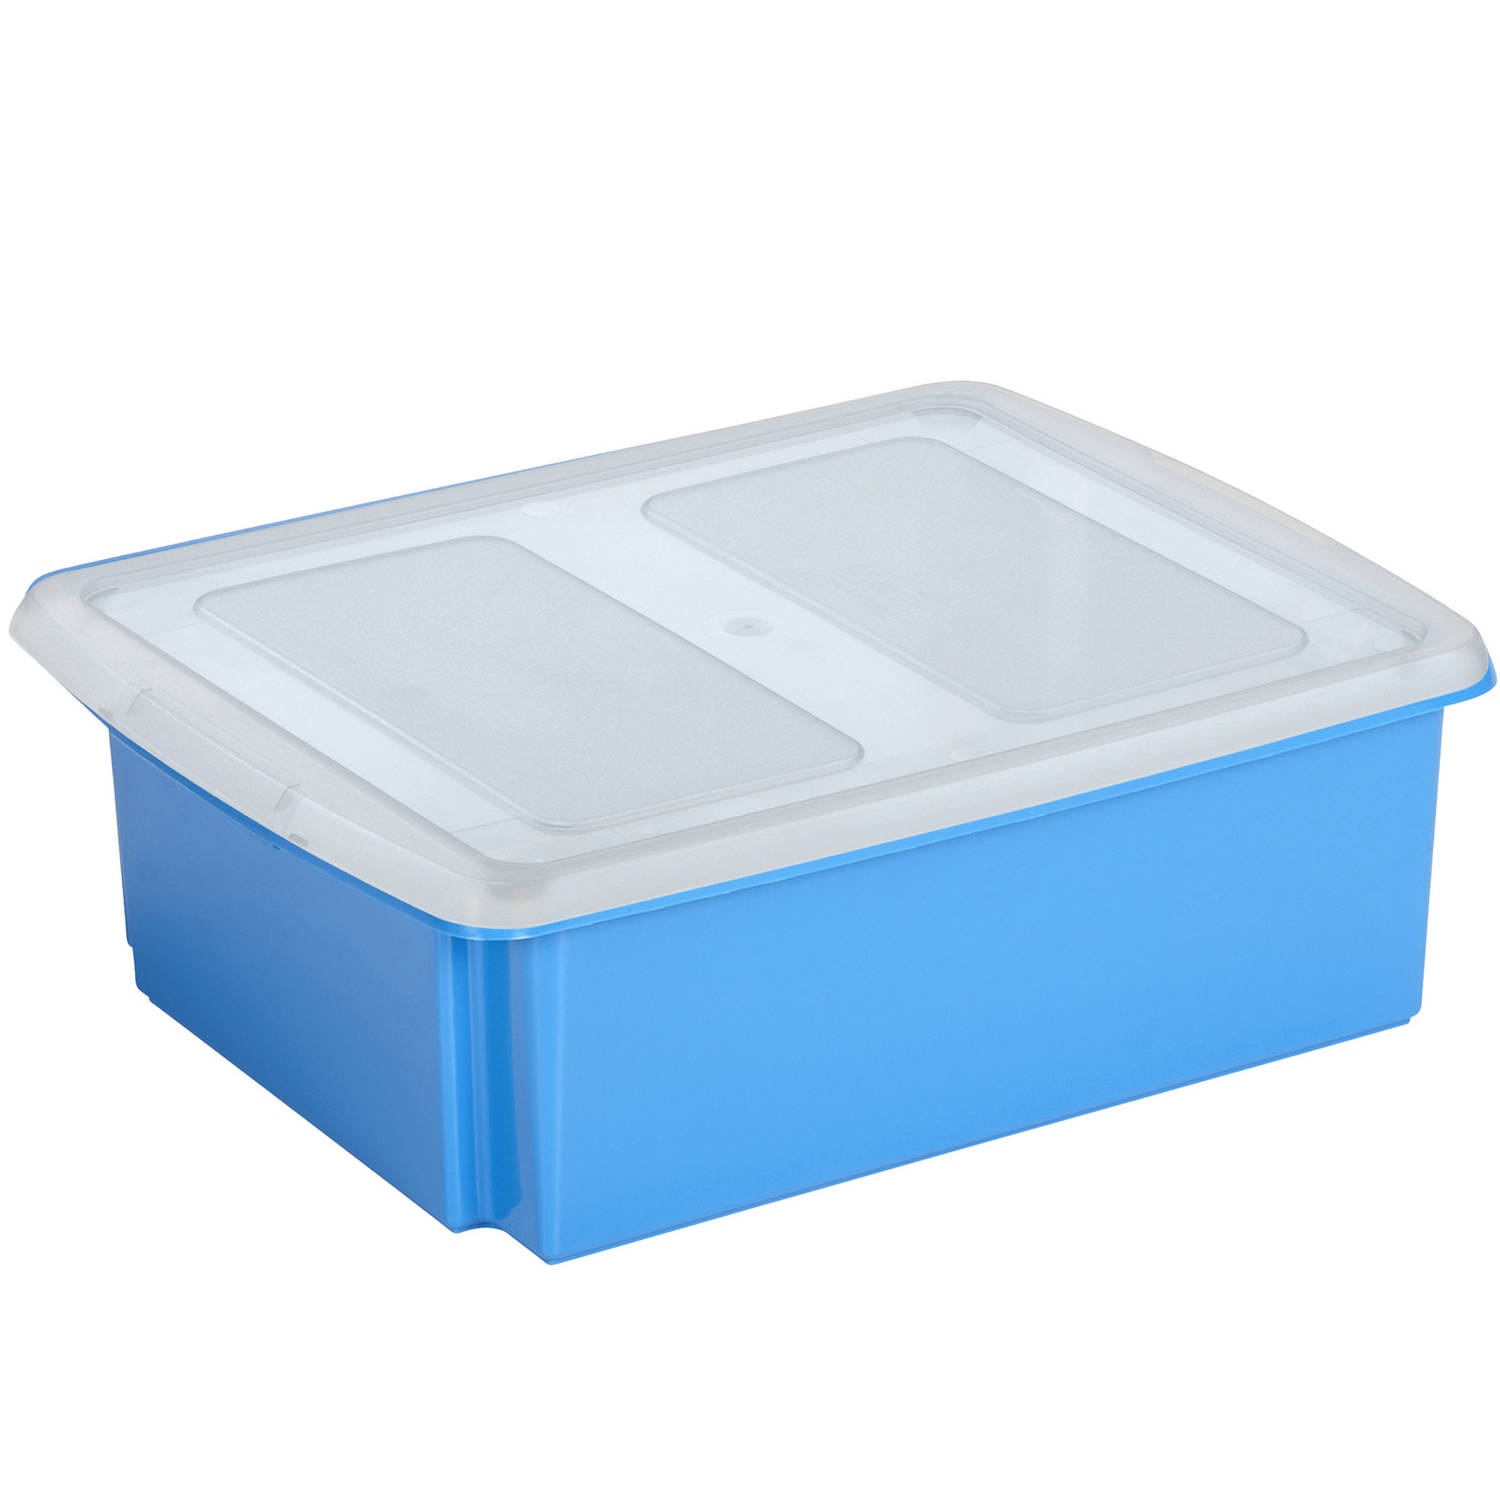 Sunware opslagbox kunststof 17 liter blauw 45 x 36 x 14 cm met deksel Opbergbox